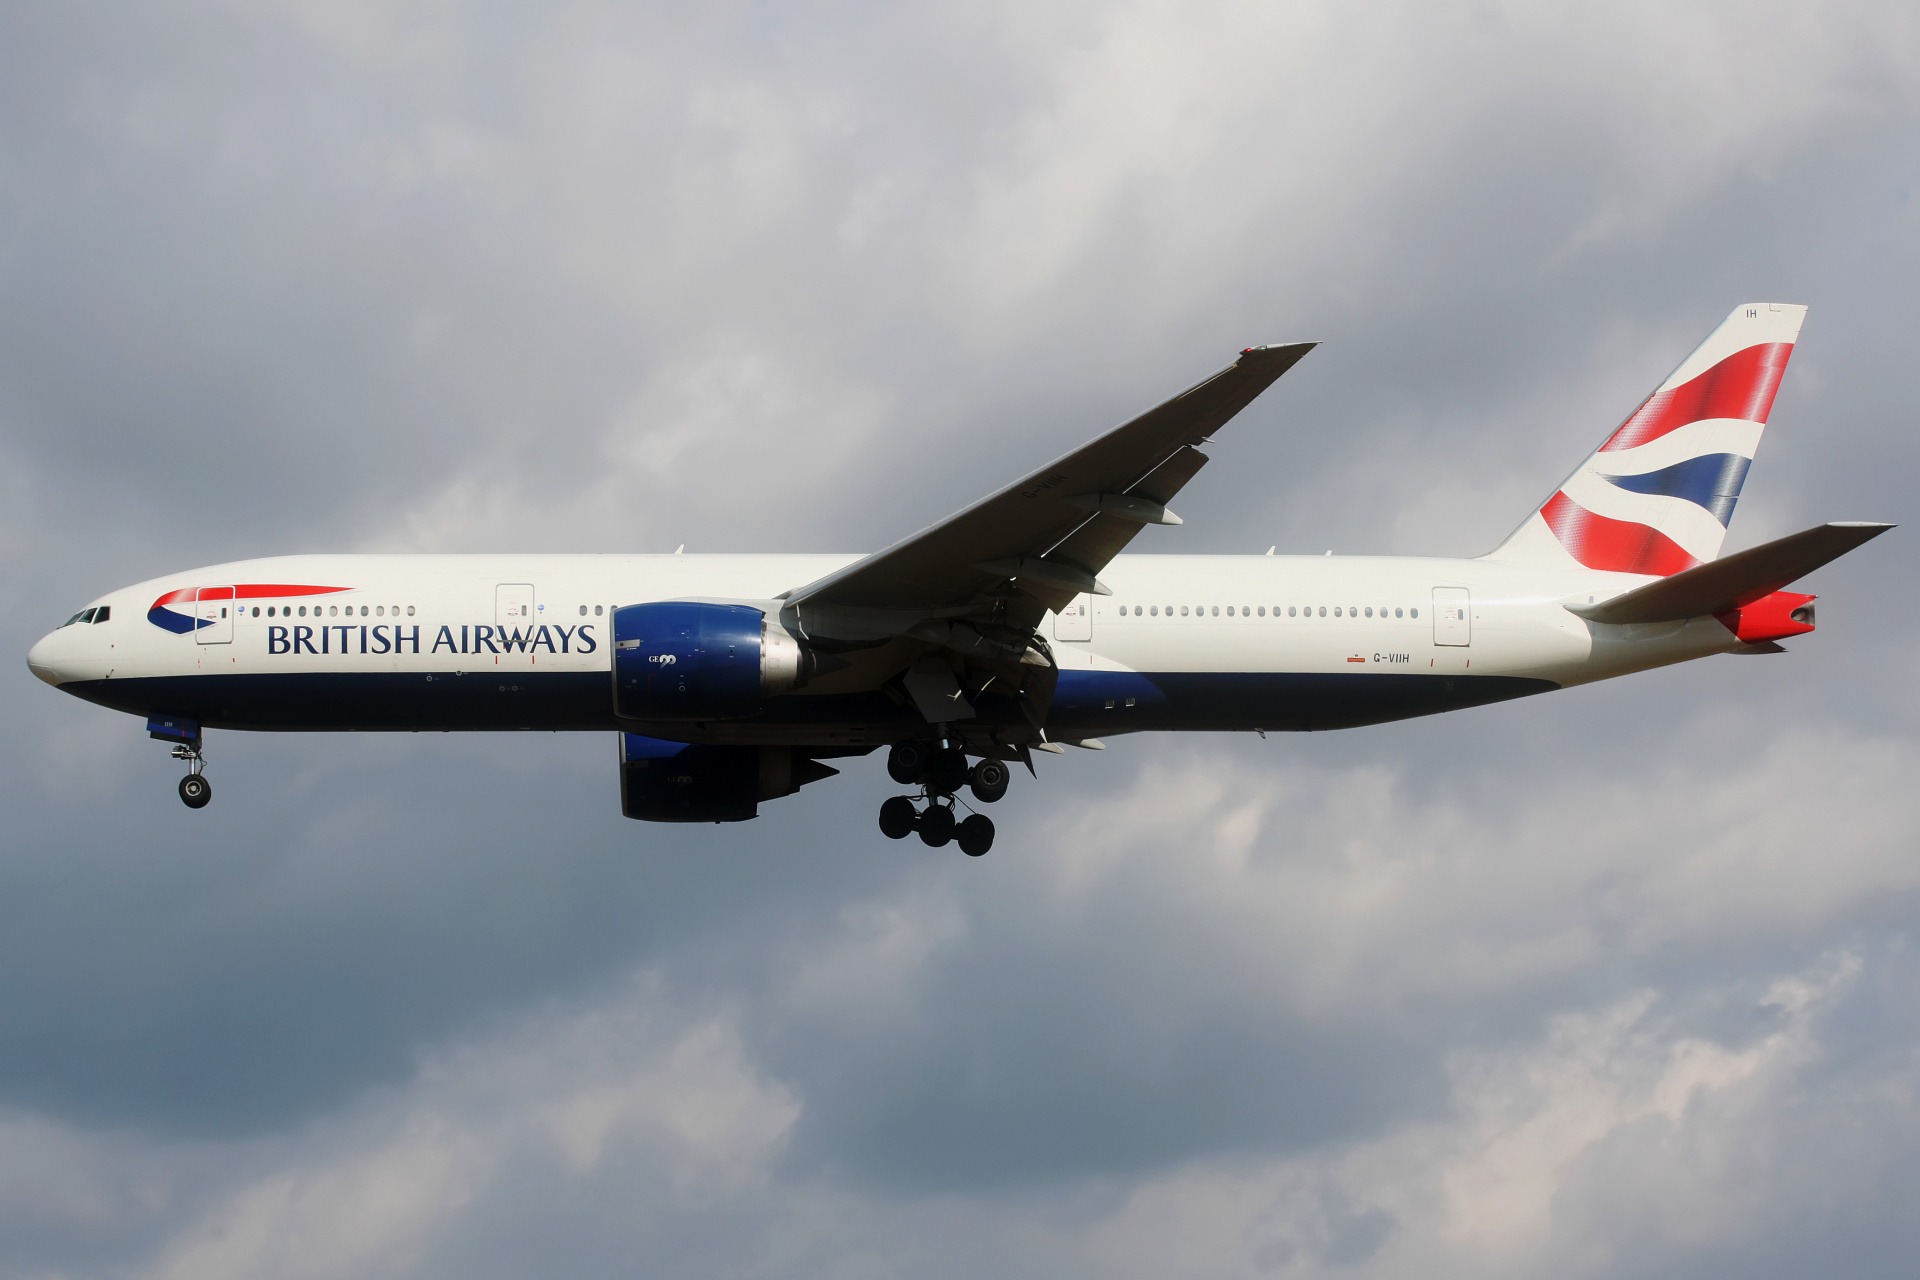 G-VIIH (Aircraft » EPWA Spotting » Boeing 777-200 and 200ER » British Airways)